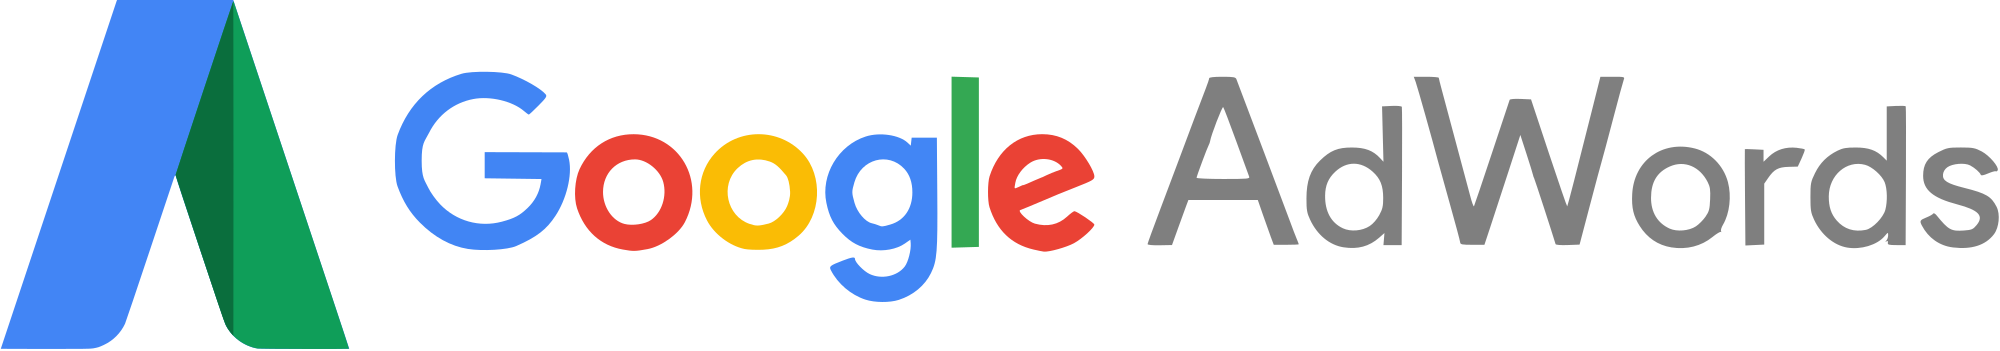 Logo transparent images open. Google adwords png